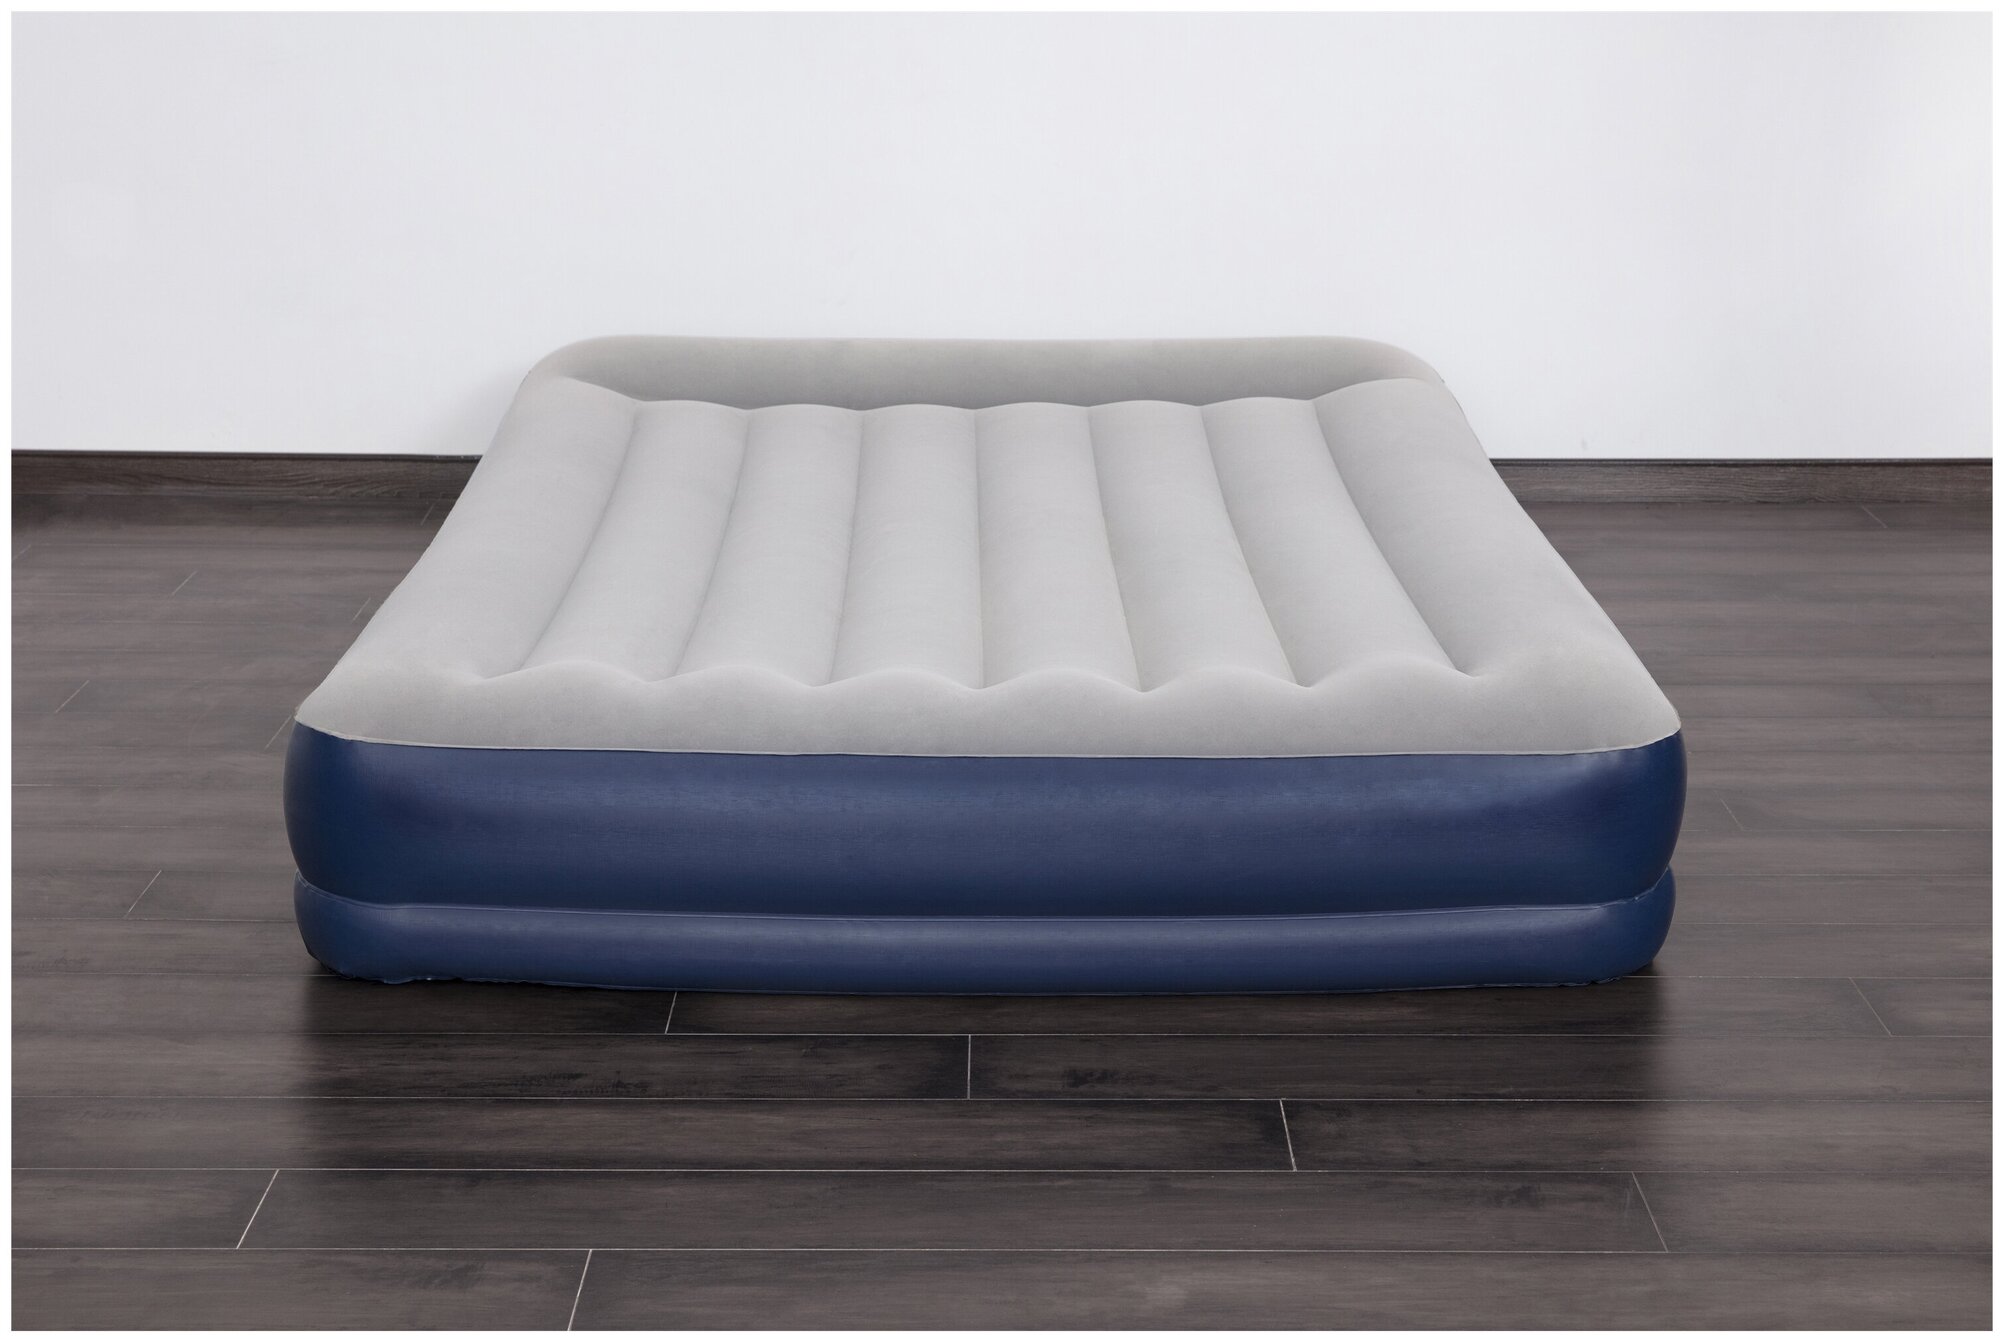 Надувная кровать BestWay Tritech Airbed 203х152х36см 67725